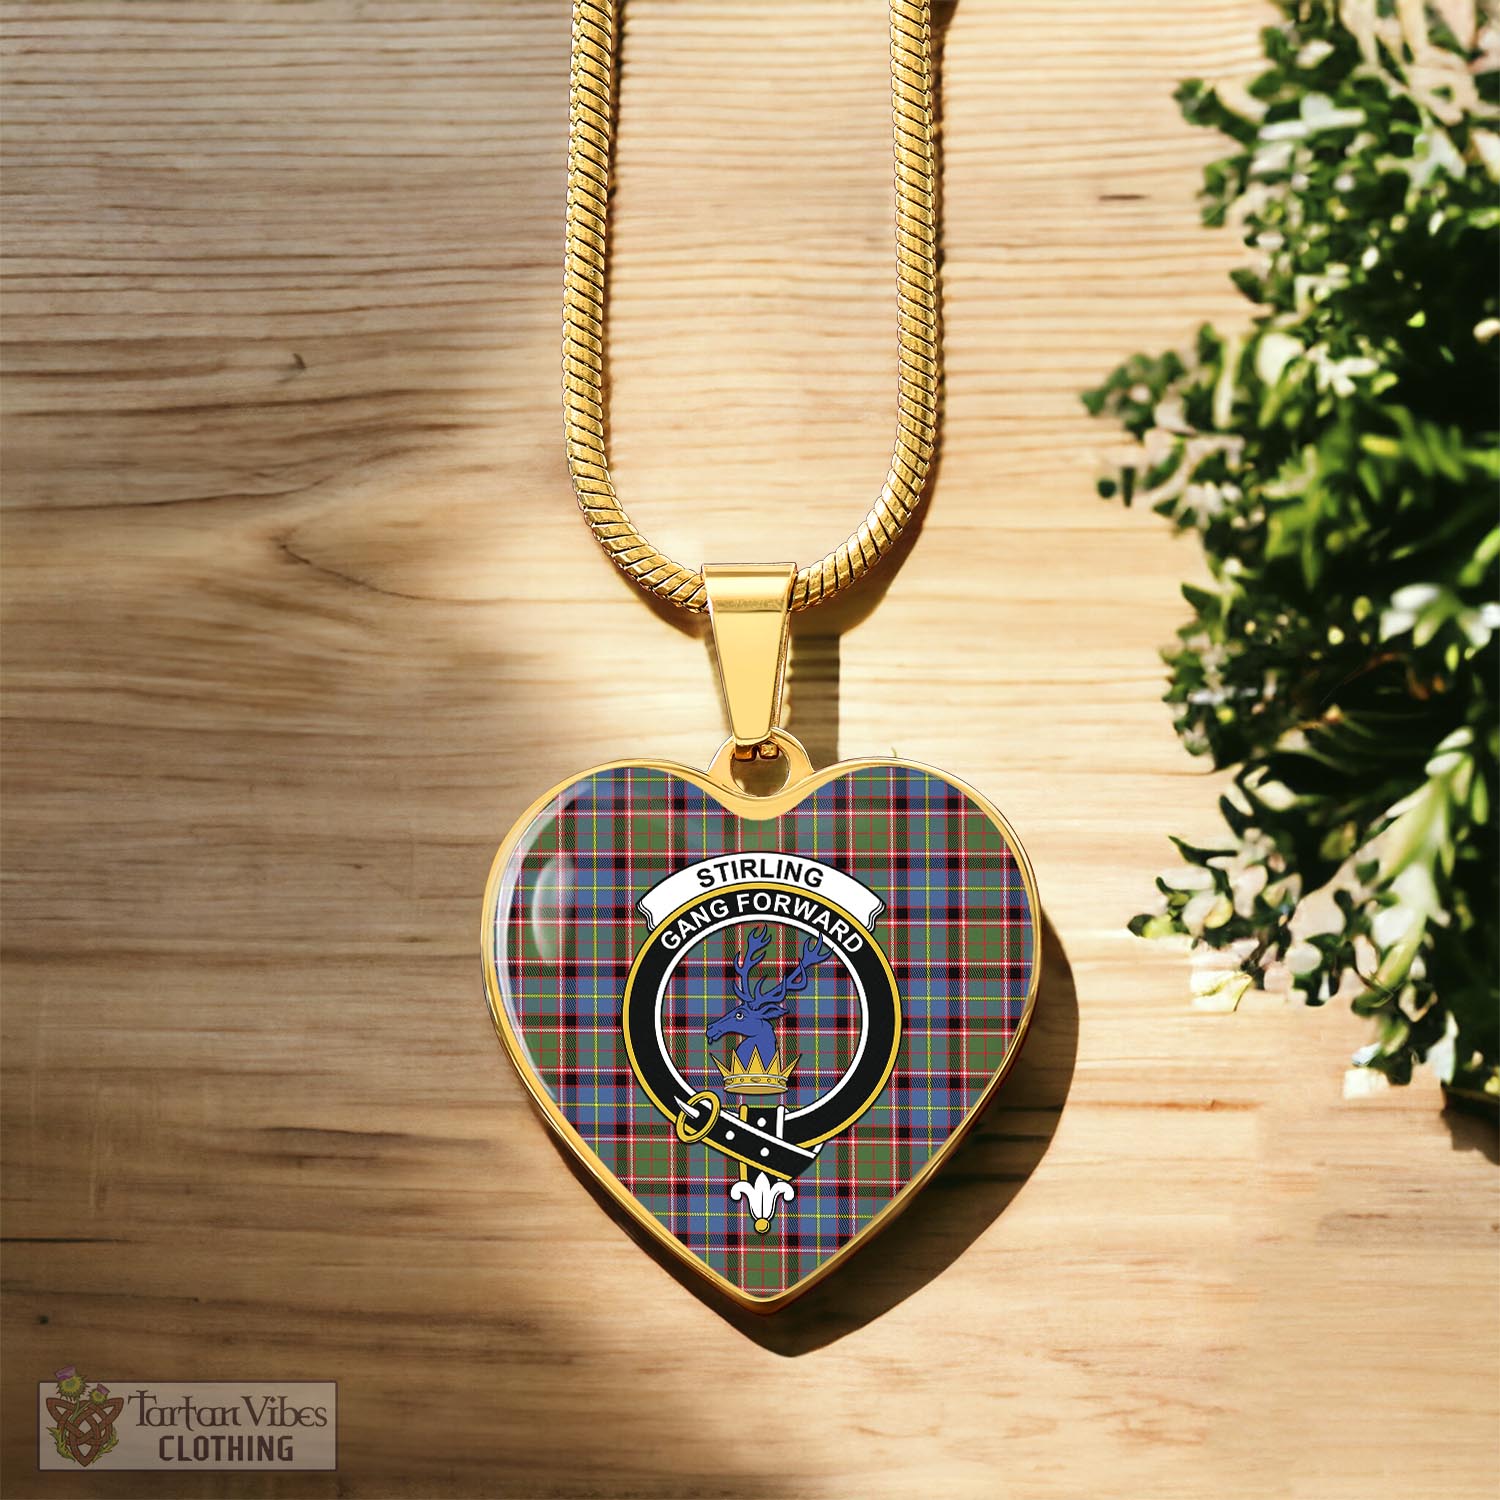 Tartan Vibes Clothing Stirling Bannockburn Tartan Heart Necklace with Family Crest